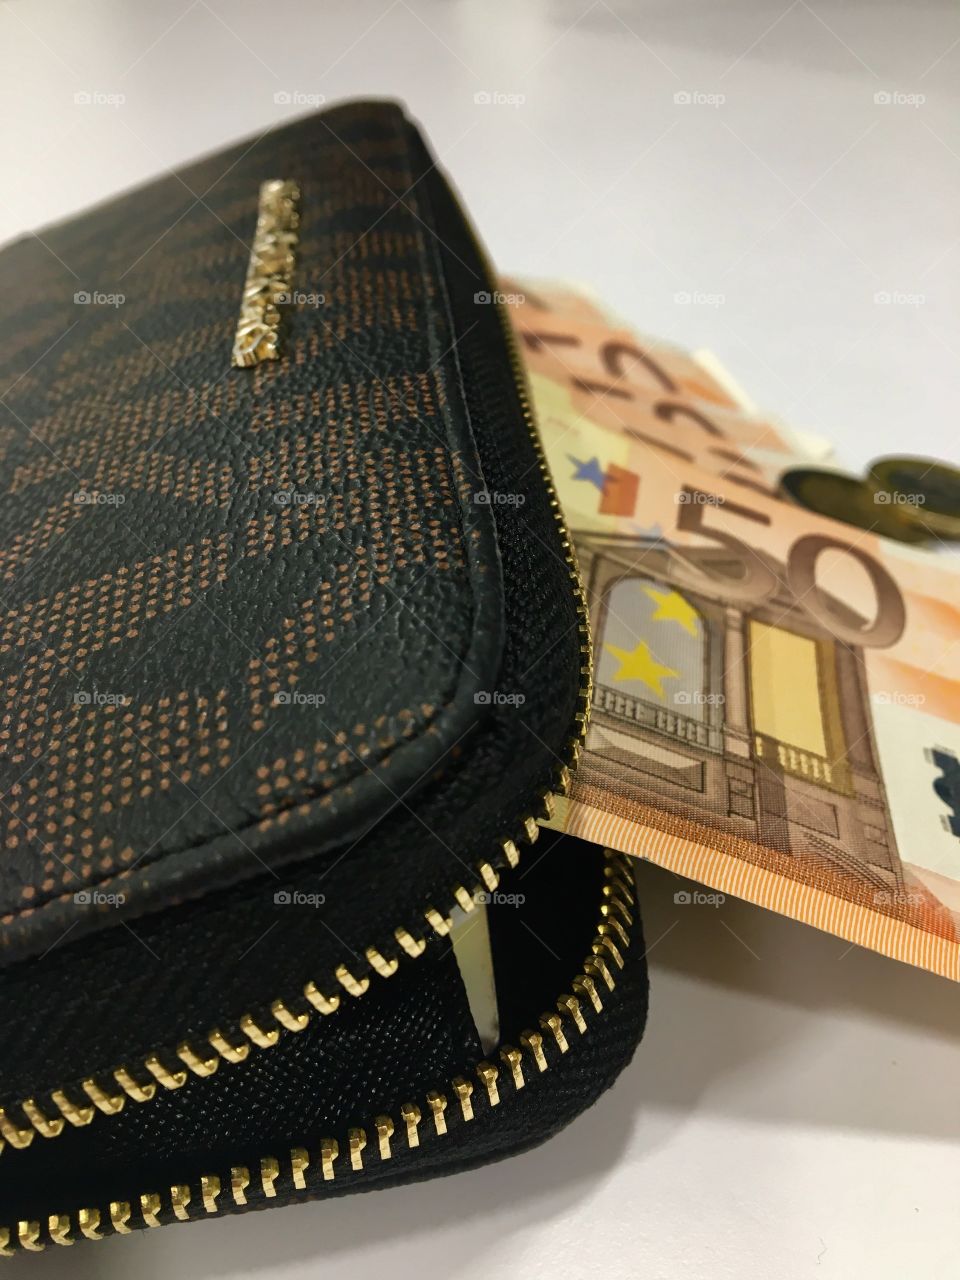 Euros in a wallet 